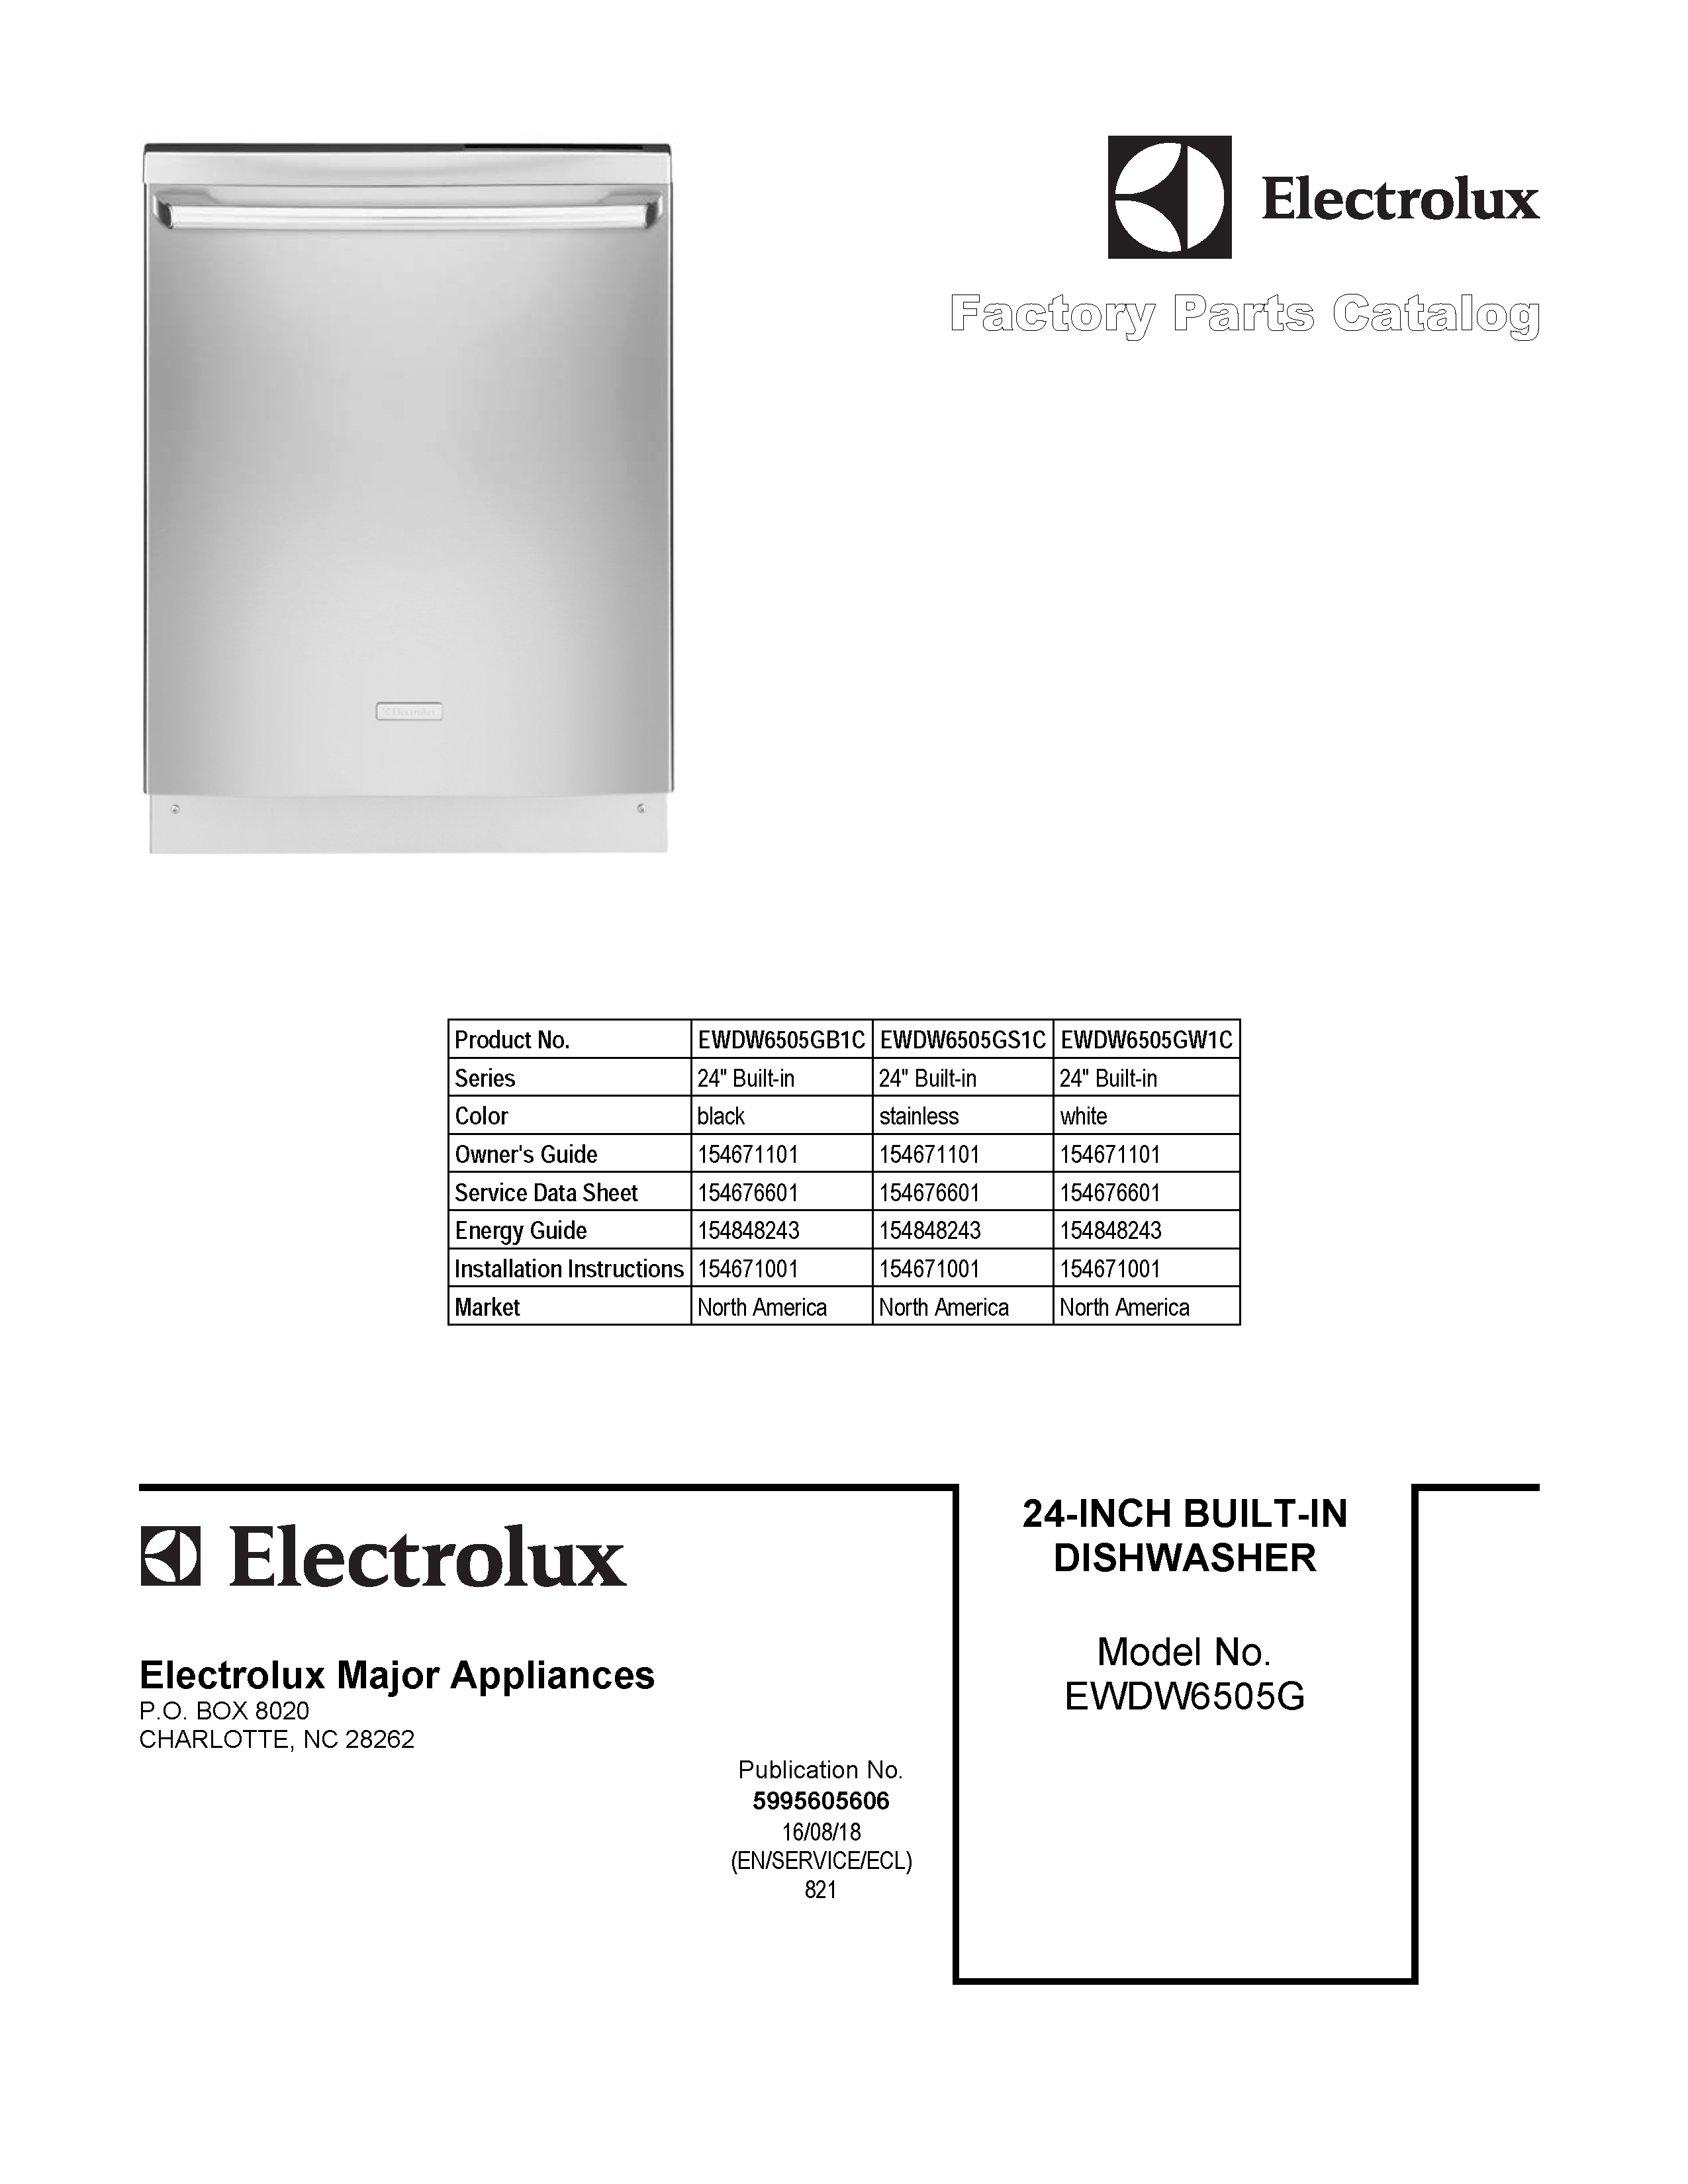 electrolux dishwasher installation guide